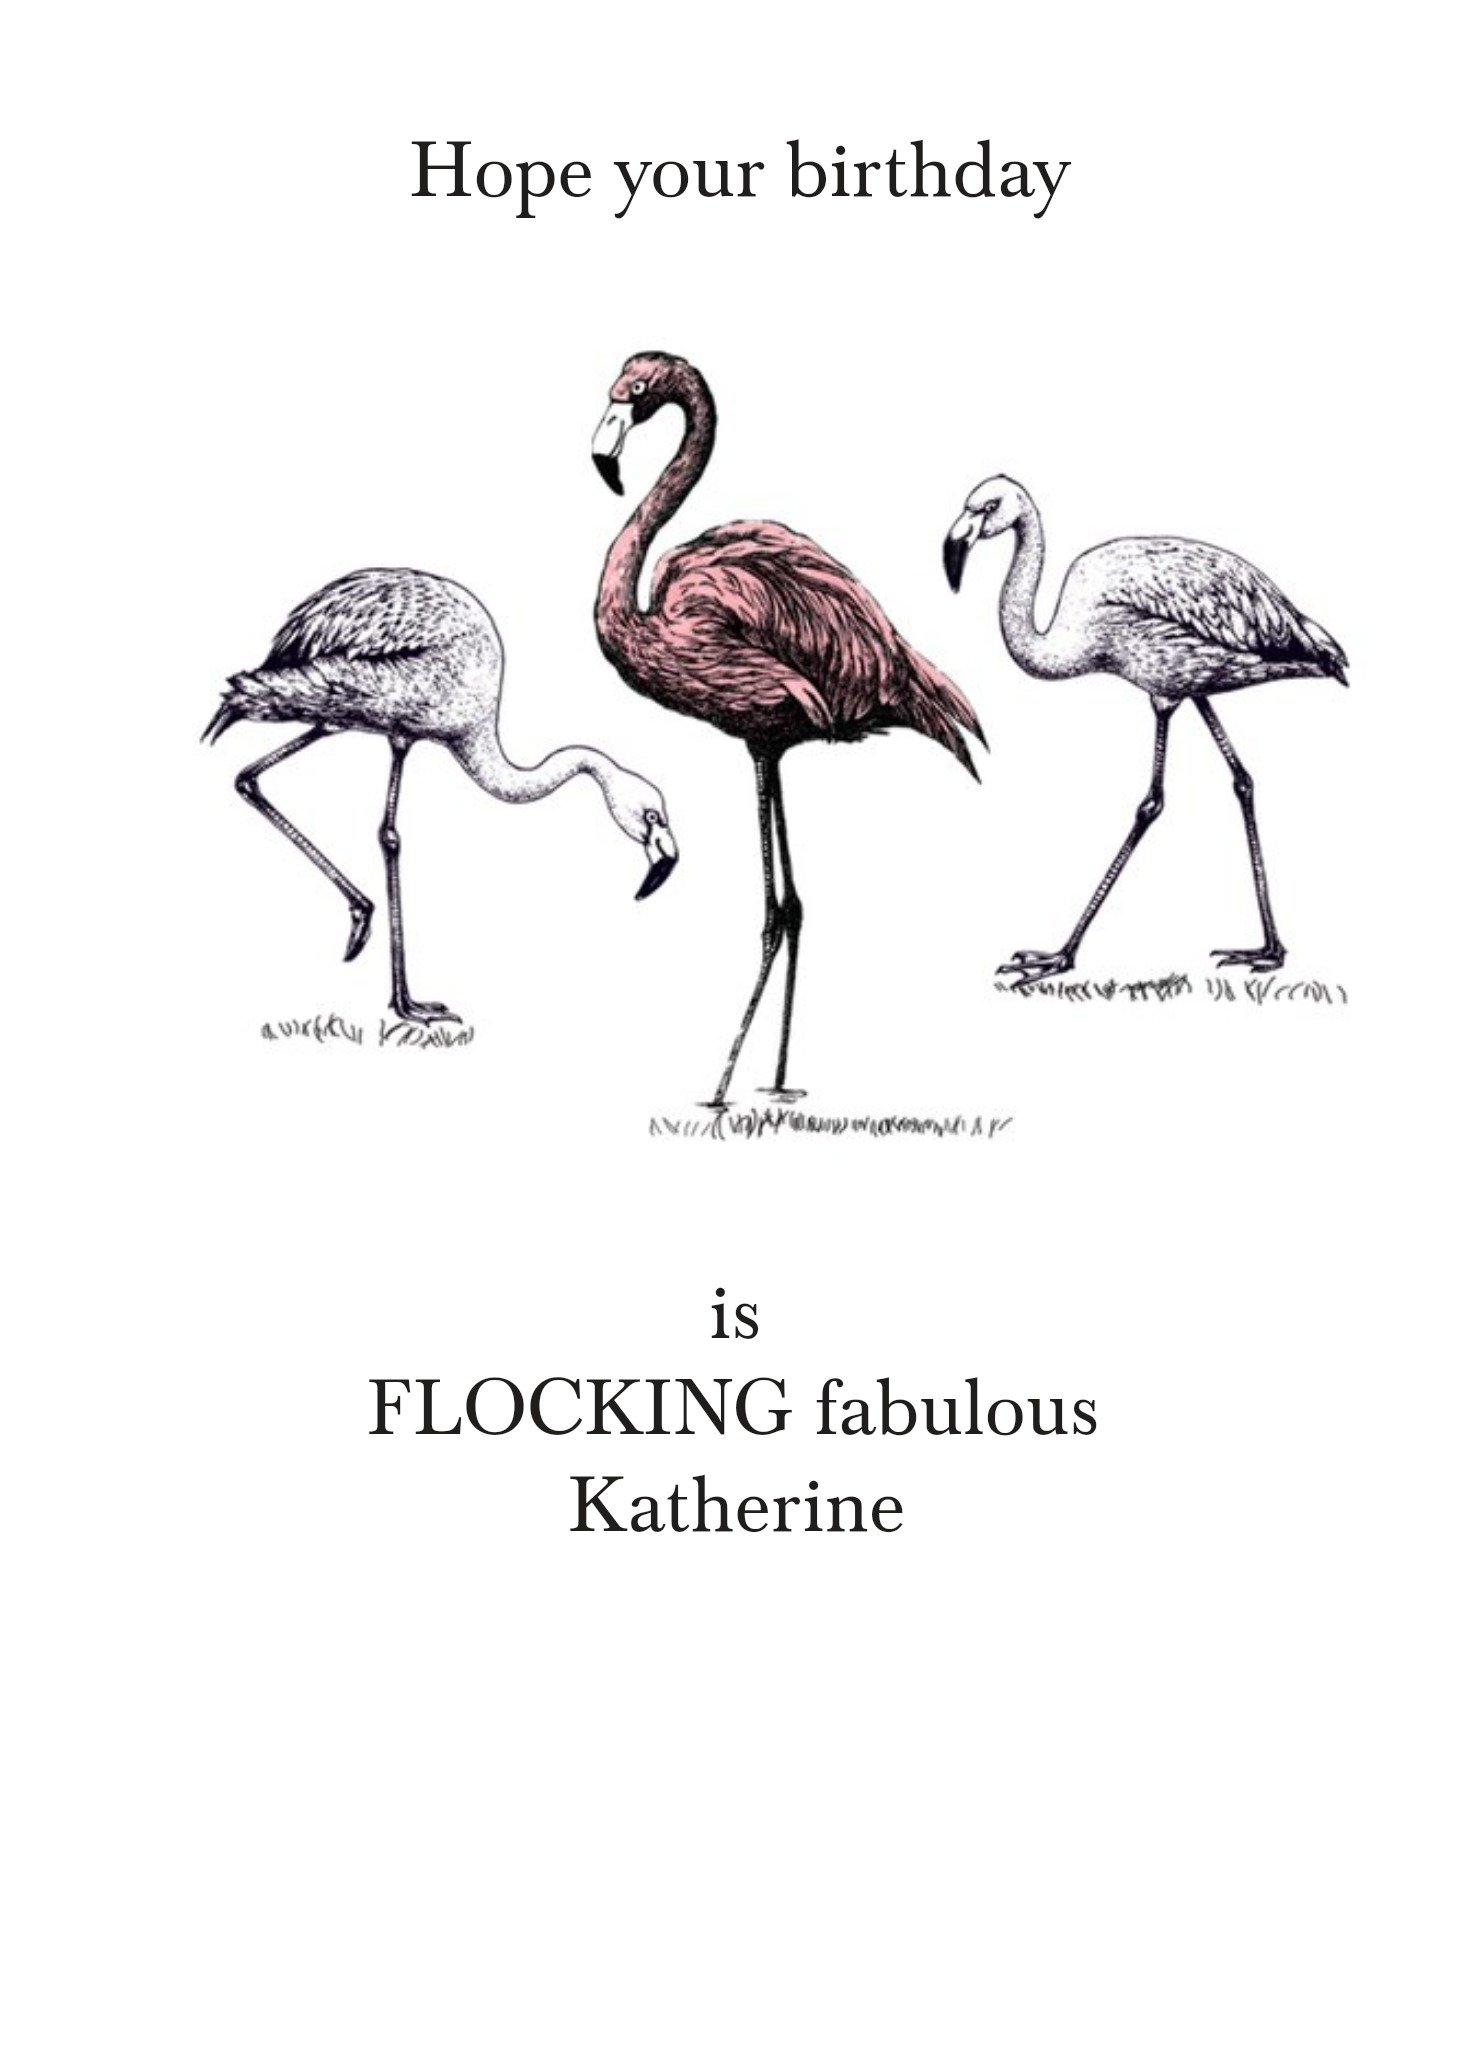 Moonpig Birthday Card - Birds - Fabulous Ecard